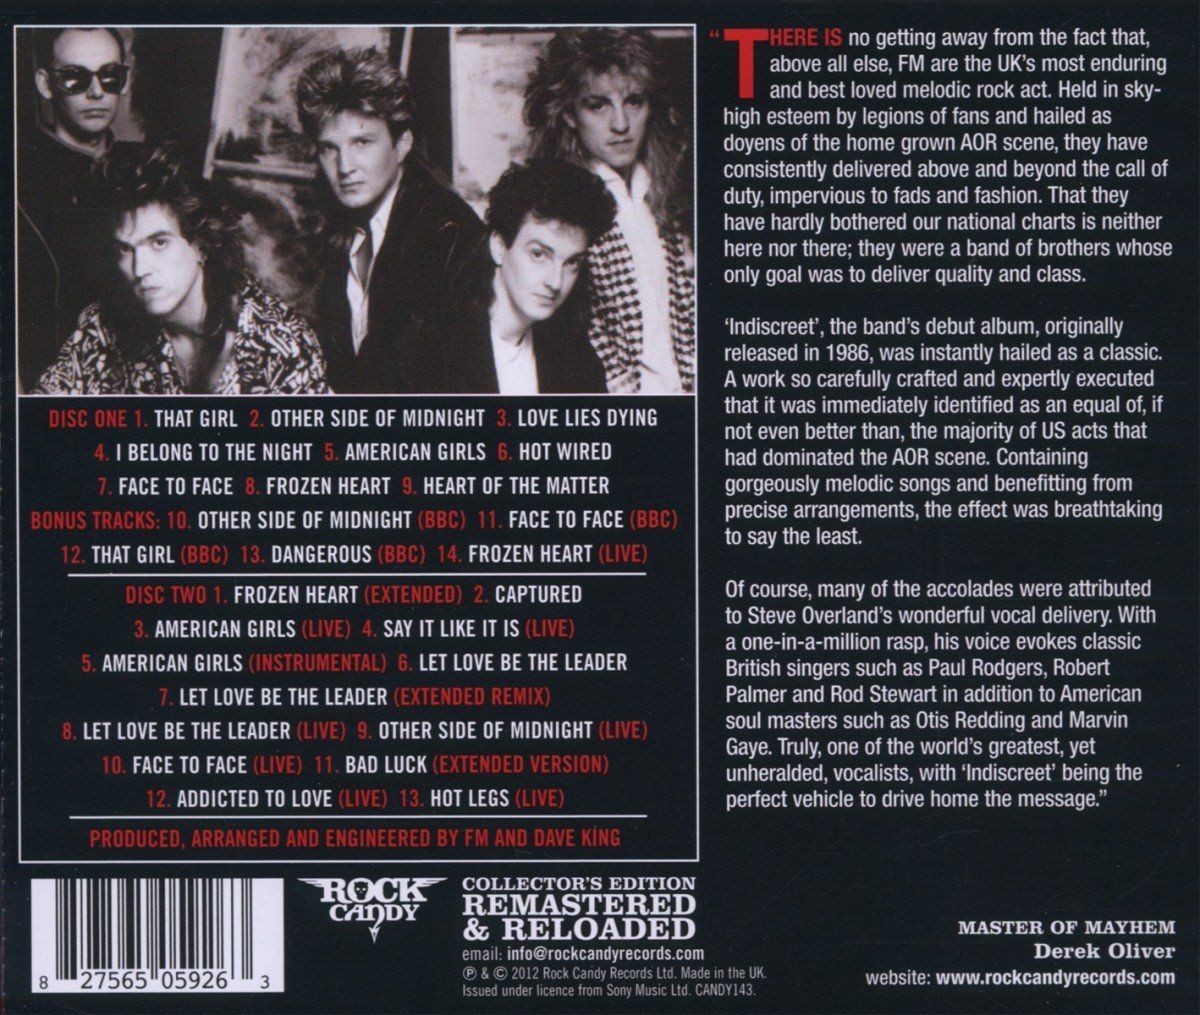 FM - Indiscreet (Rock Candy 2CD remaster with 18 bonus tracks) - CD - New